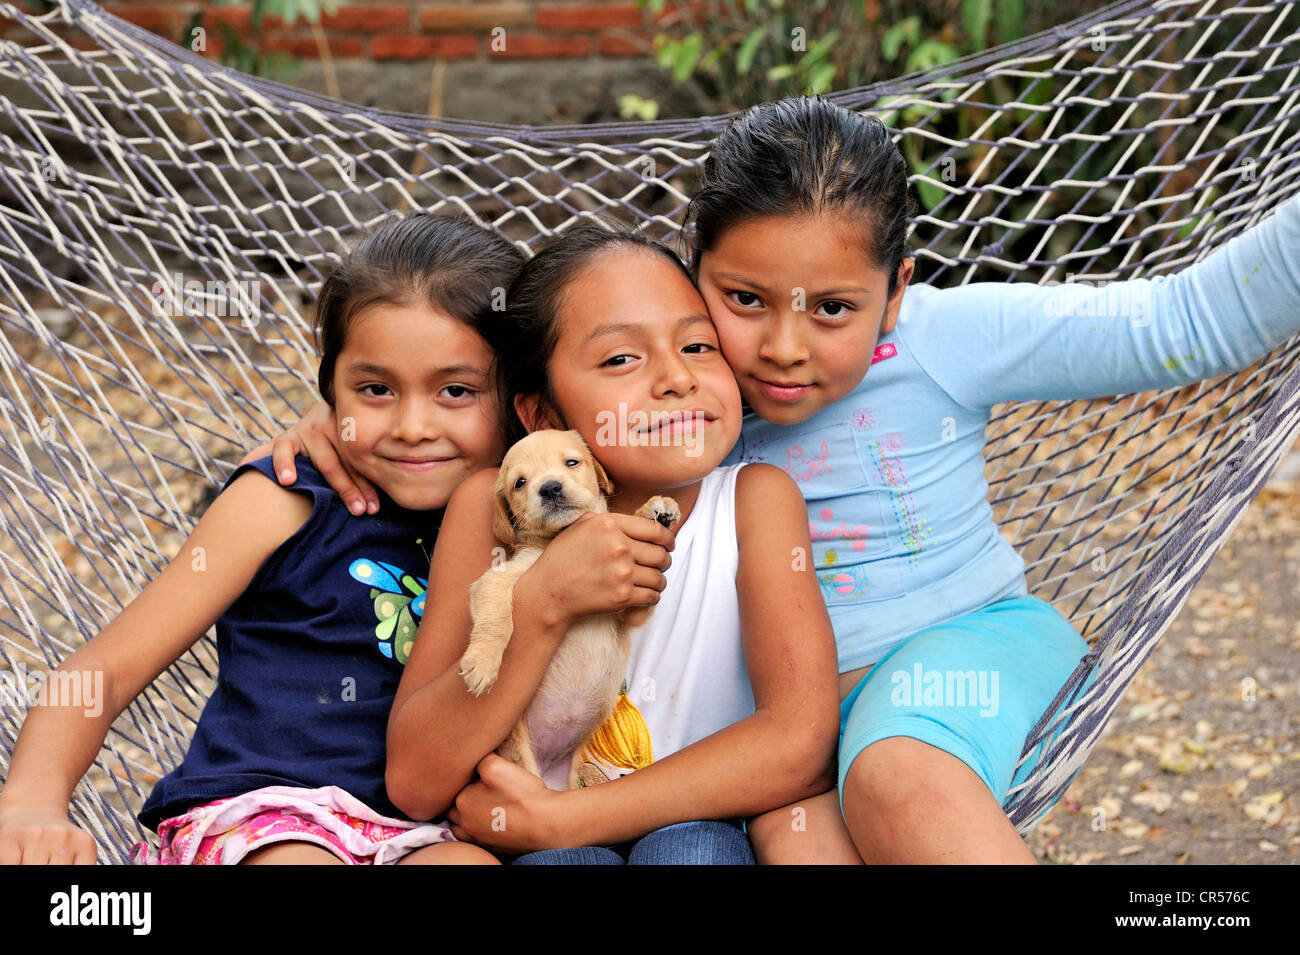 Girl with a puppy in a hammock, Queretaro, Mexico, North America, Latin America Stock Photo